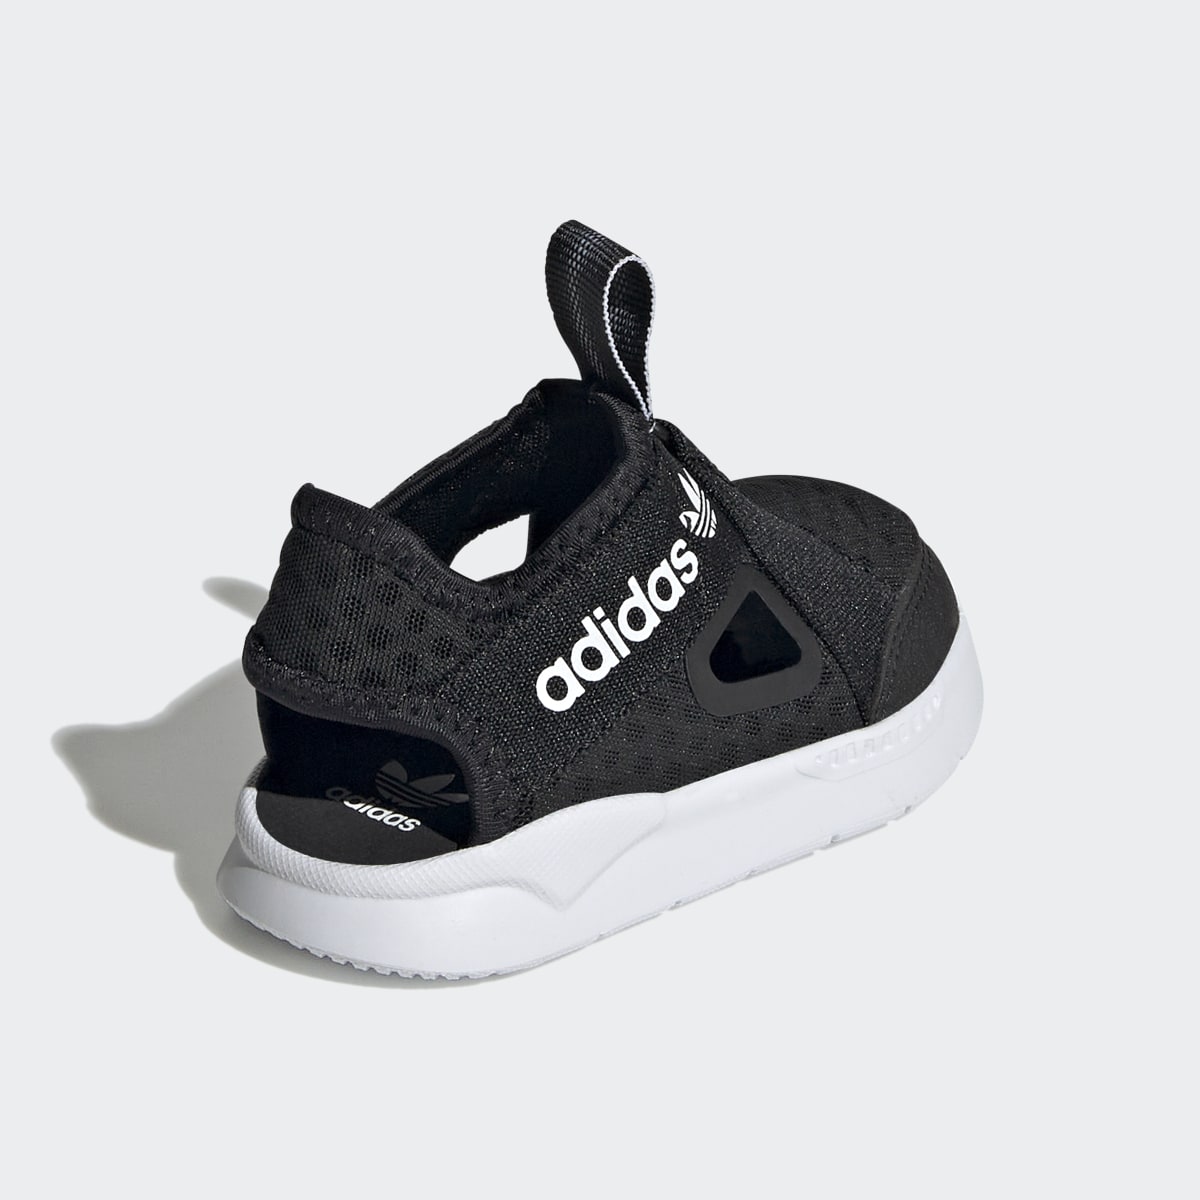 Adidas 360 Sandals. 6